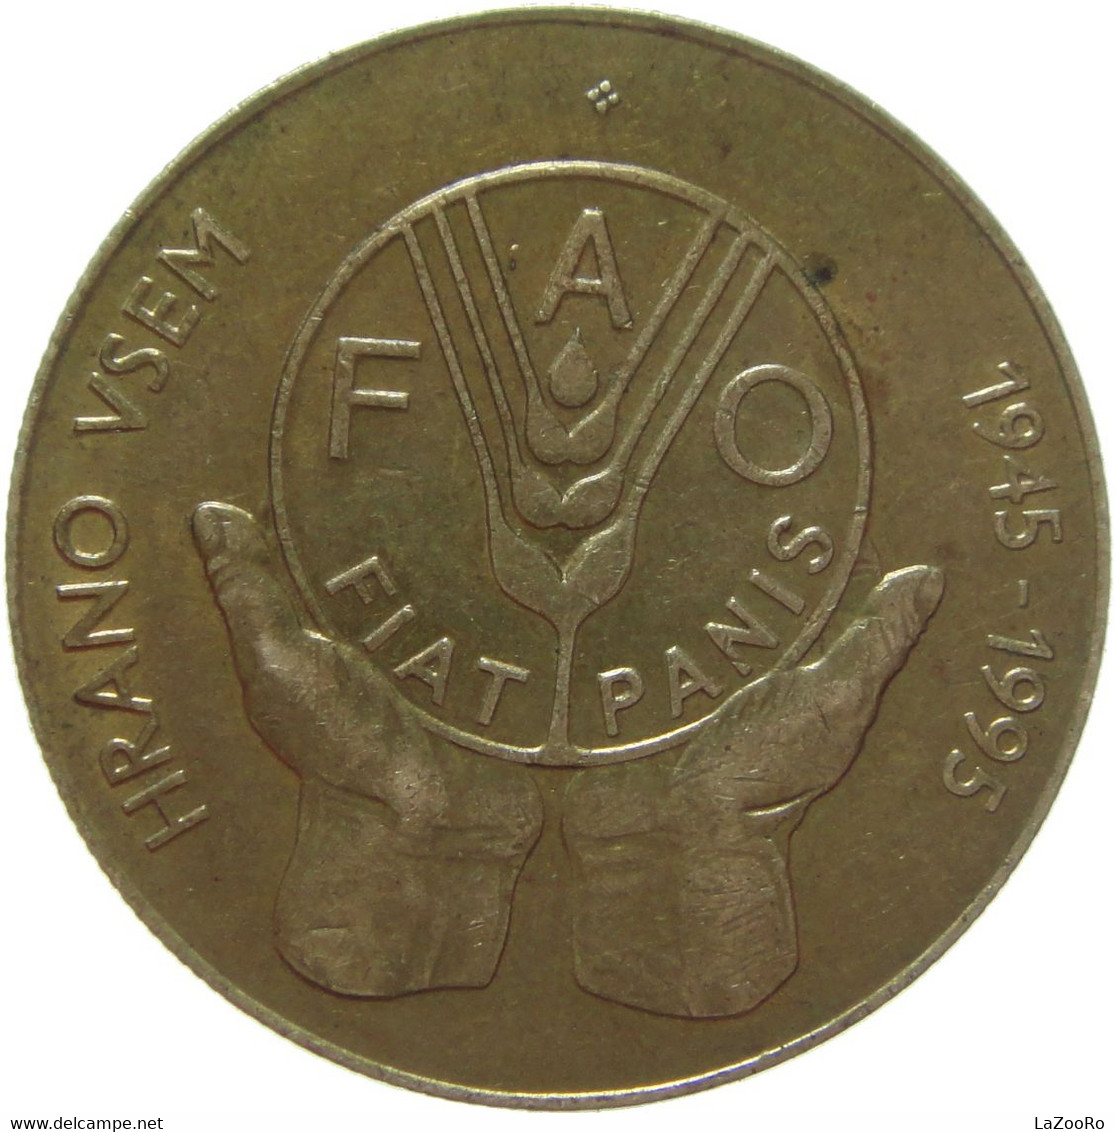 LaZooRo: Slovenia 5 Tolarjev 1995 XF / UNC FAO - Slovenia